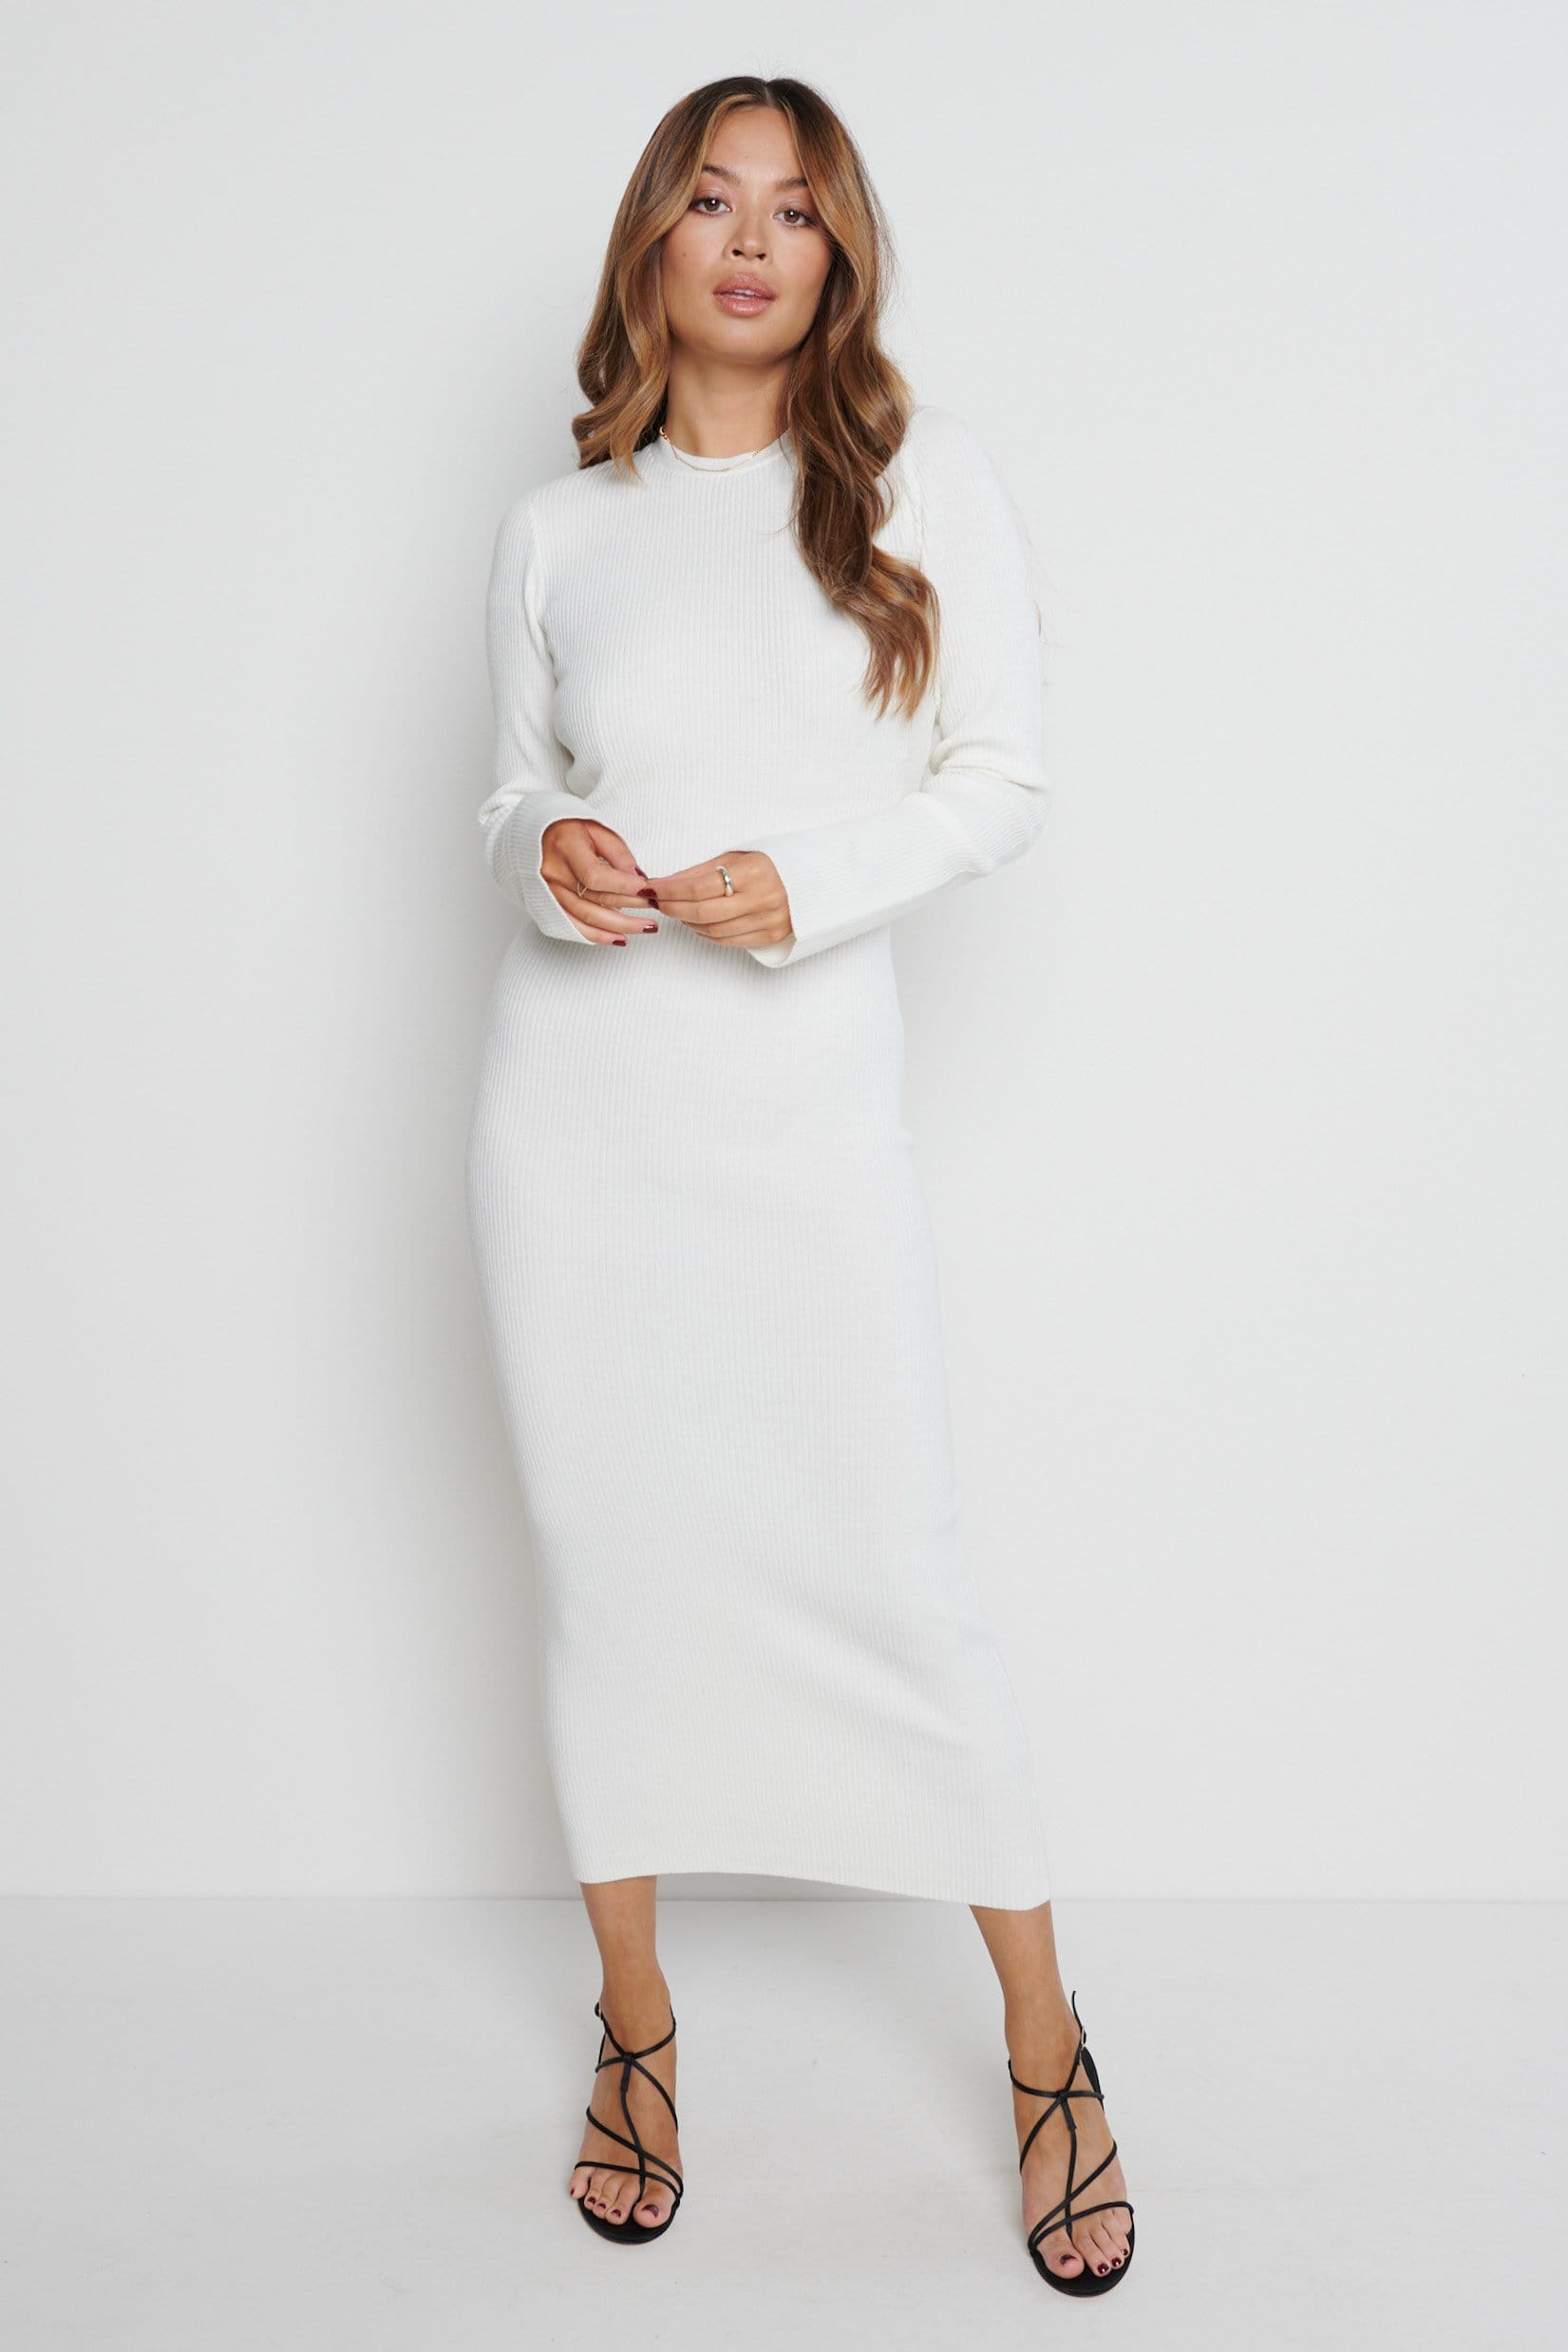 Lia Backless Knit Dress - Cream